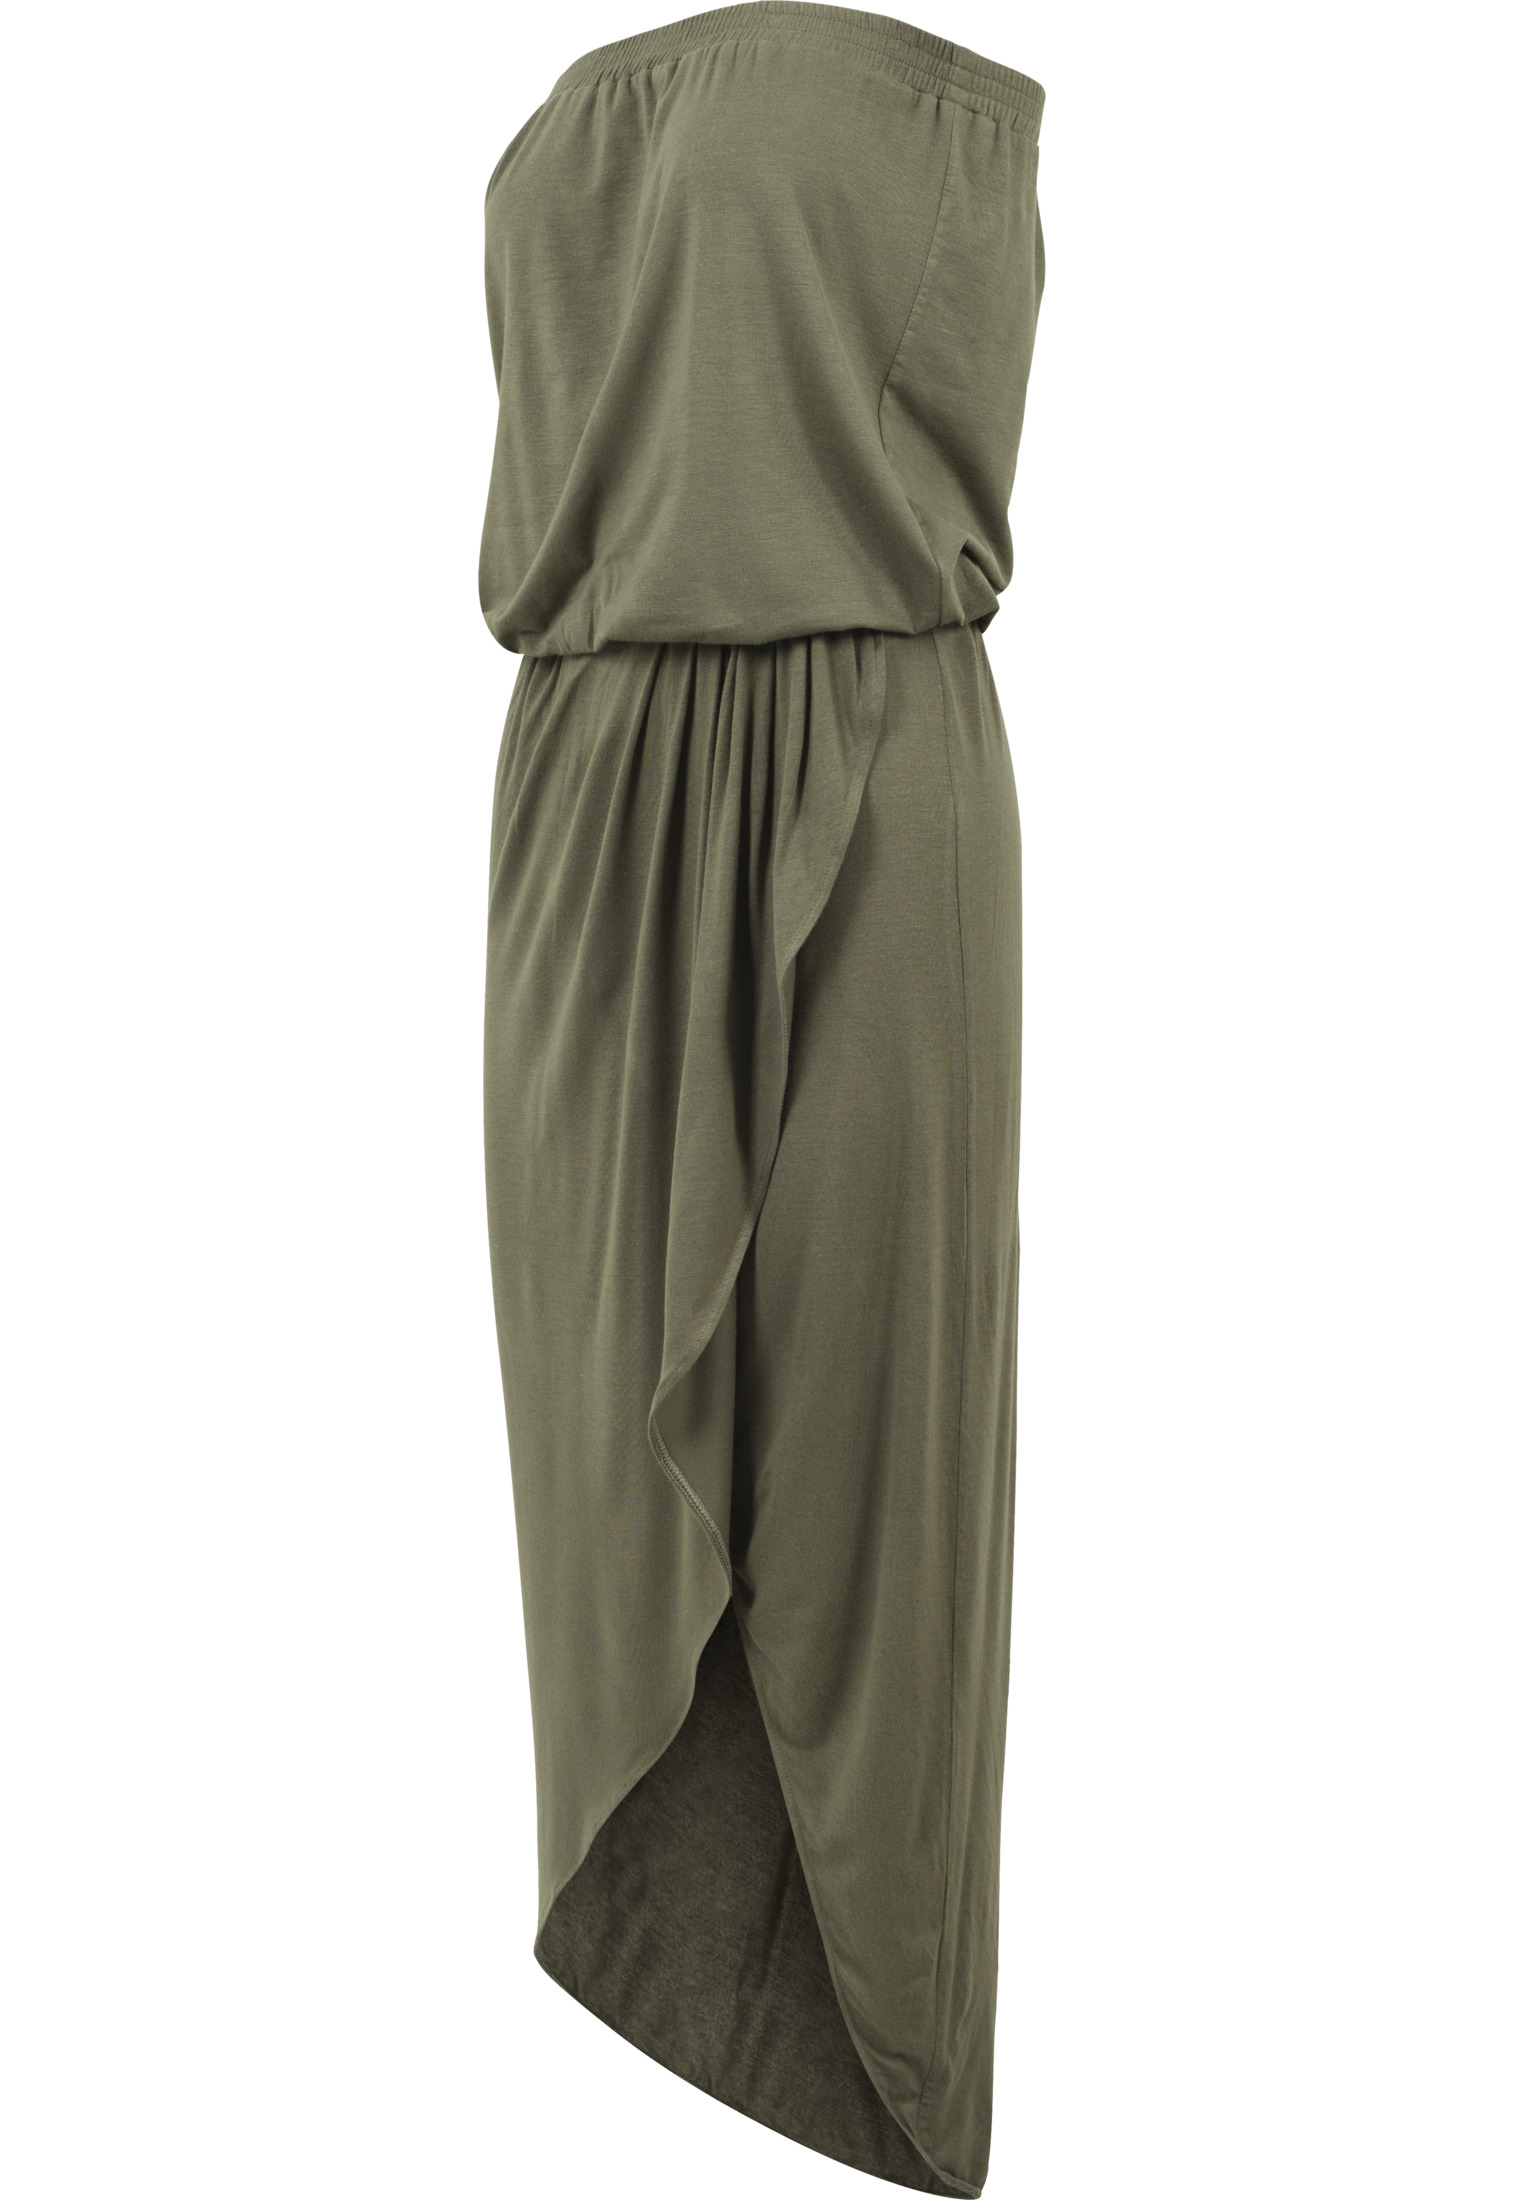 Kleider & R?cke Ladies Viscose Bandeau Dress in Farbe olive